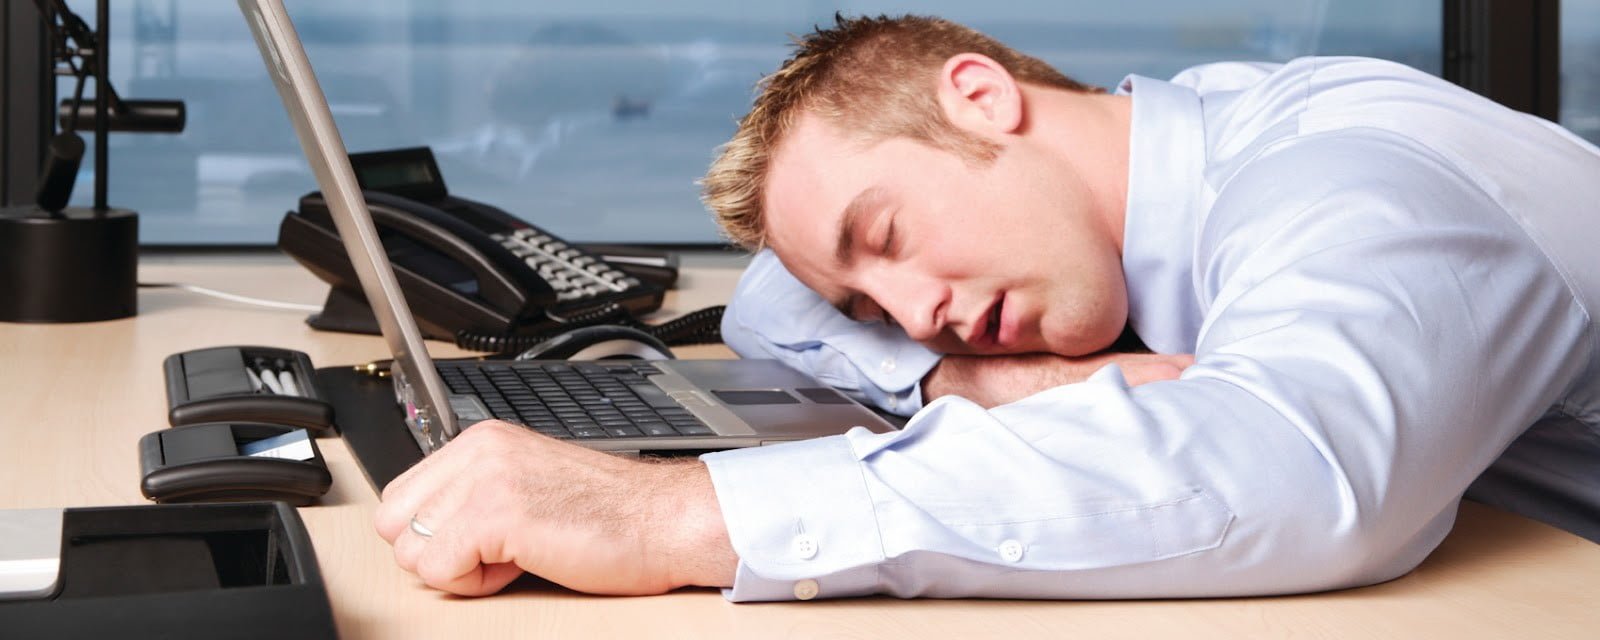 Man Asleep On Desk E1422821193489 مجلة نقطة العلمية